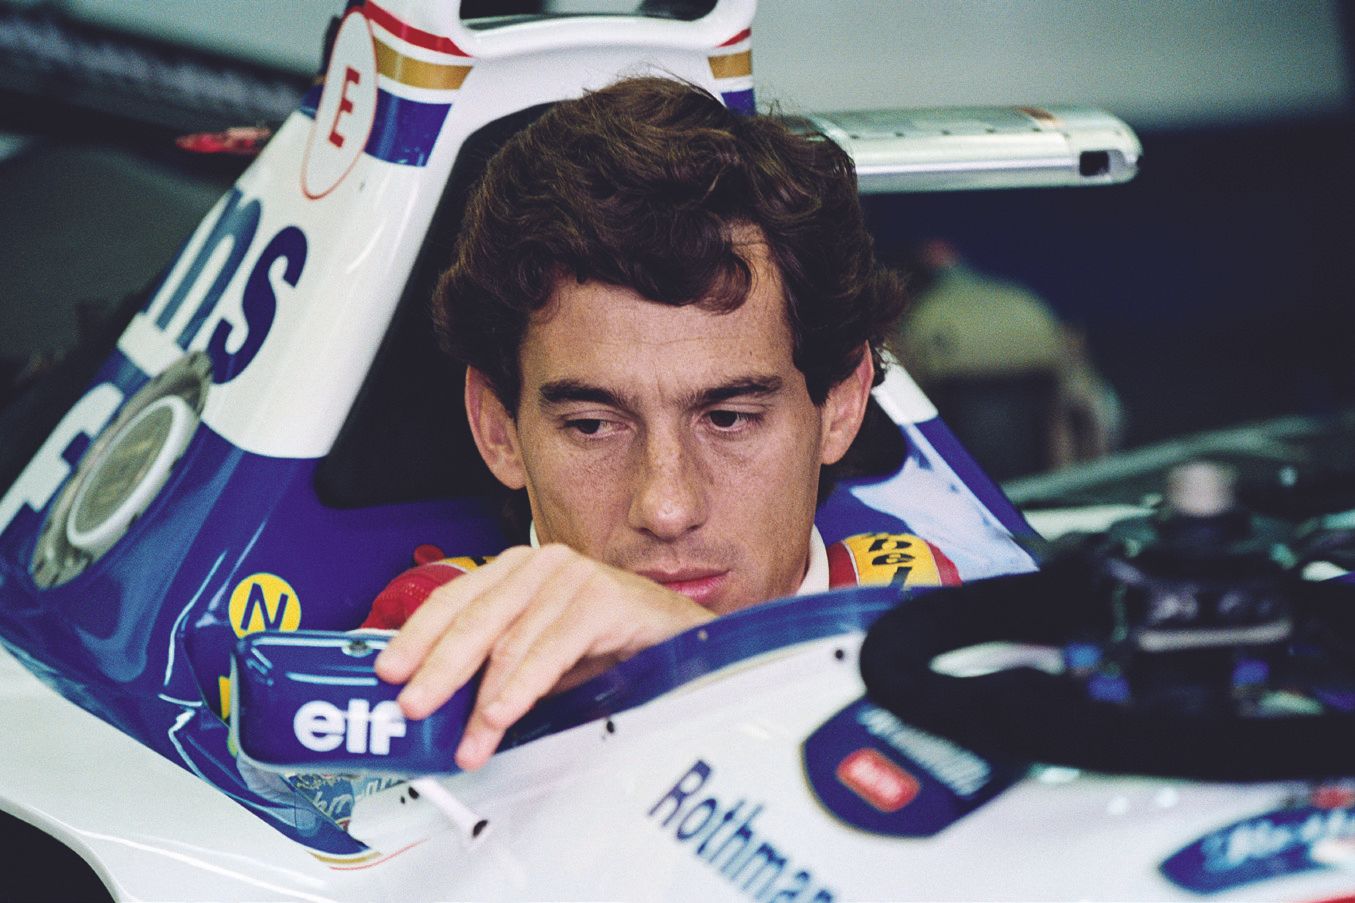 AFP - Jean-Loup GAUTREAU AFP - Jean-Loup GAUTREAU

Ayrton Senna on May 1st, 1994&hellip;